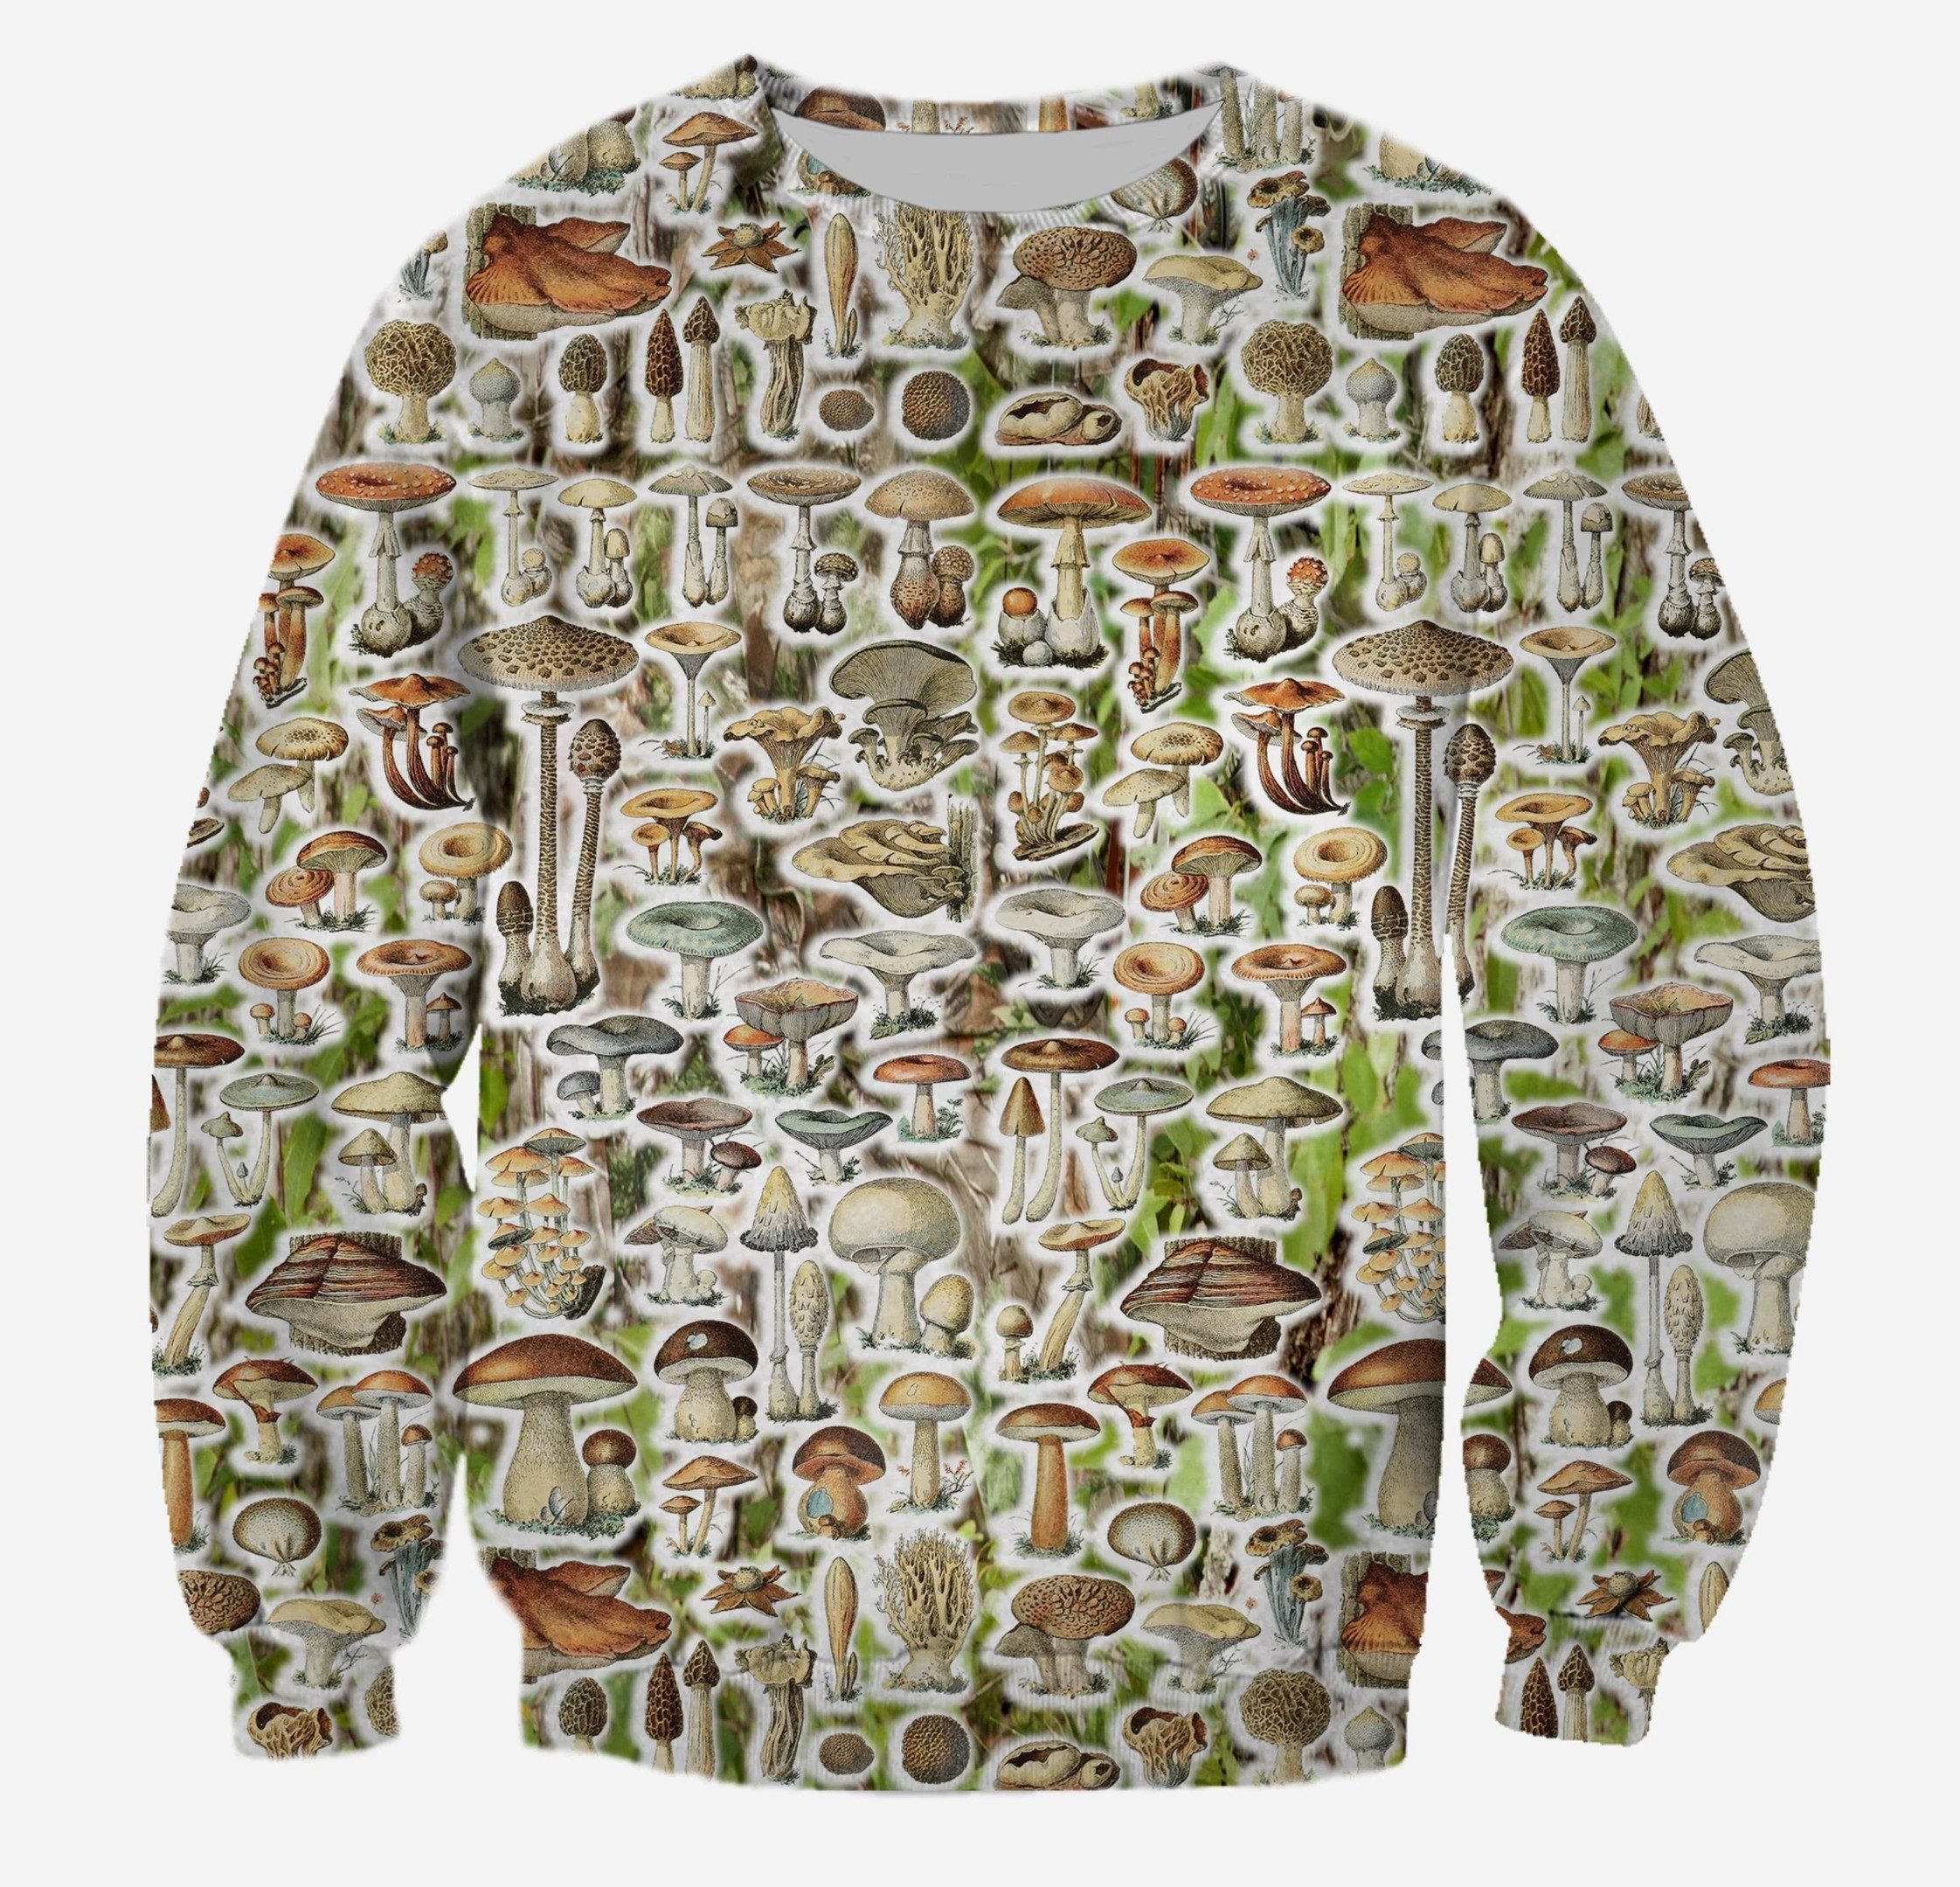 3D All Over Printed Mushroom Camo Shirts